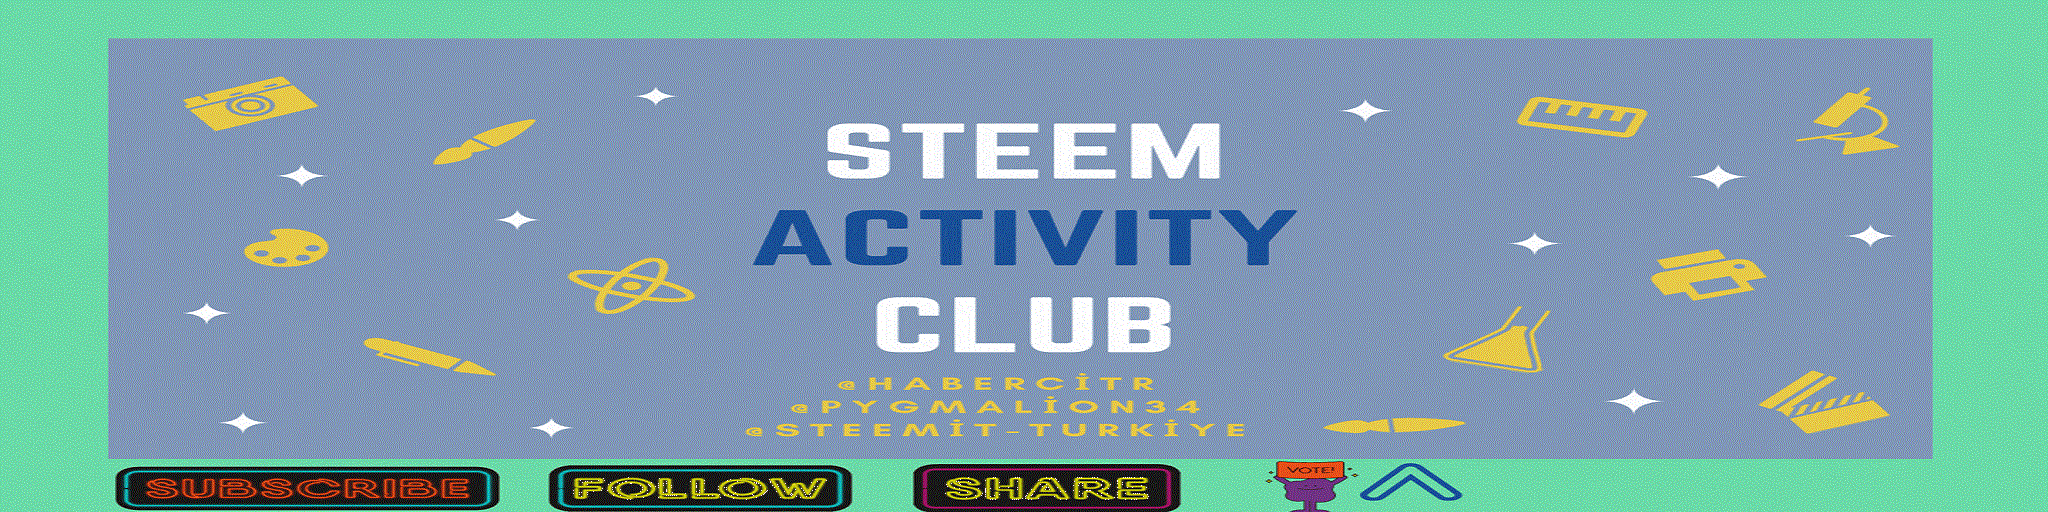 STEEM ACTIVITY CLUB.gif